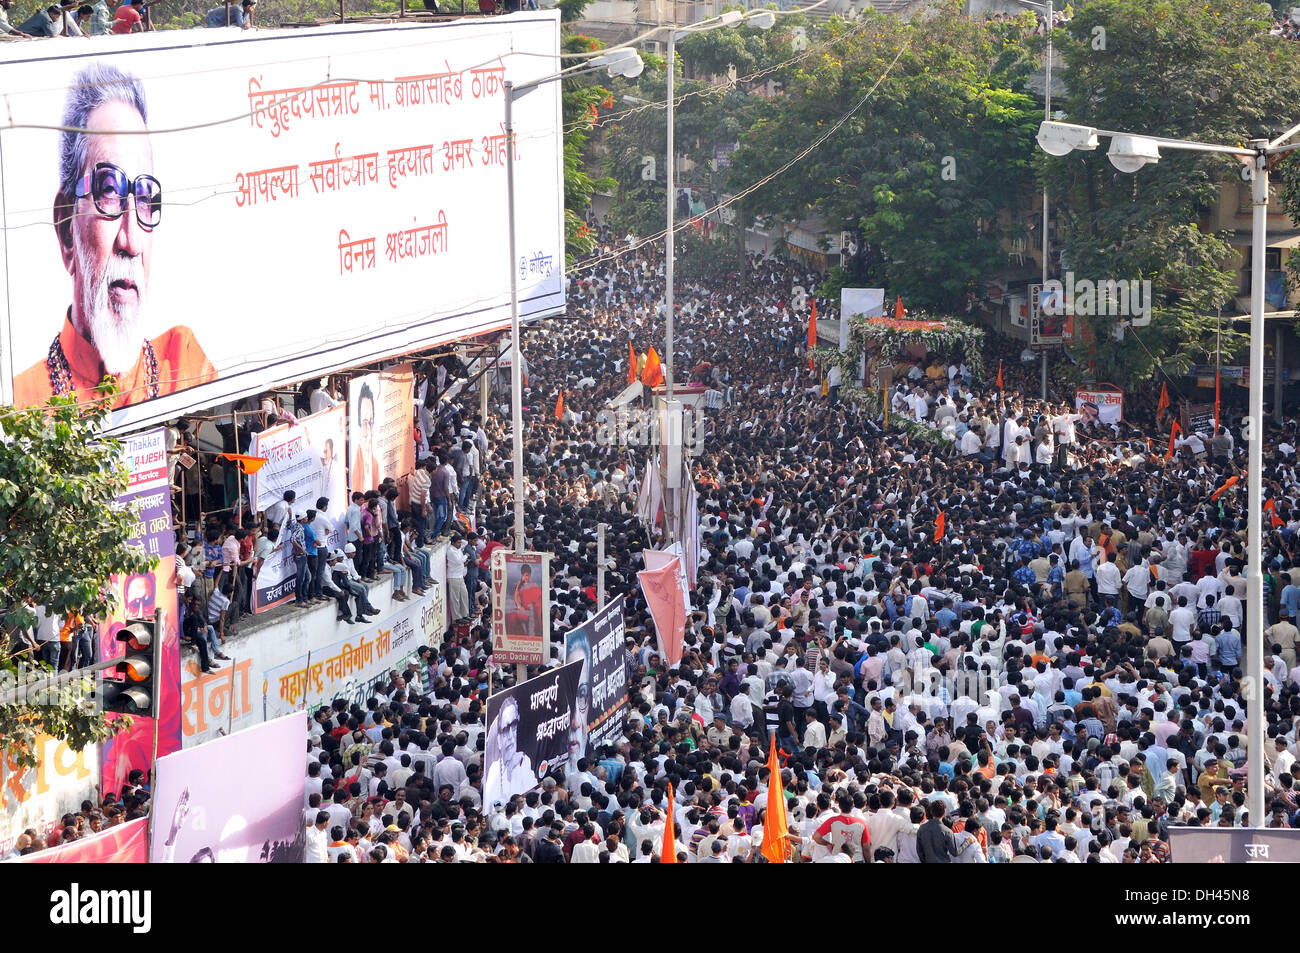 Balasaheb Thackeray Funeral Procession Crowd on road at Dadar mumbai maharashtra india November 2012 Stock Photo